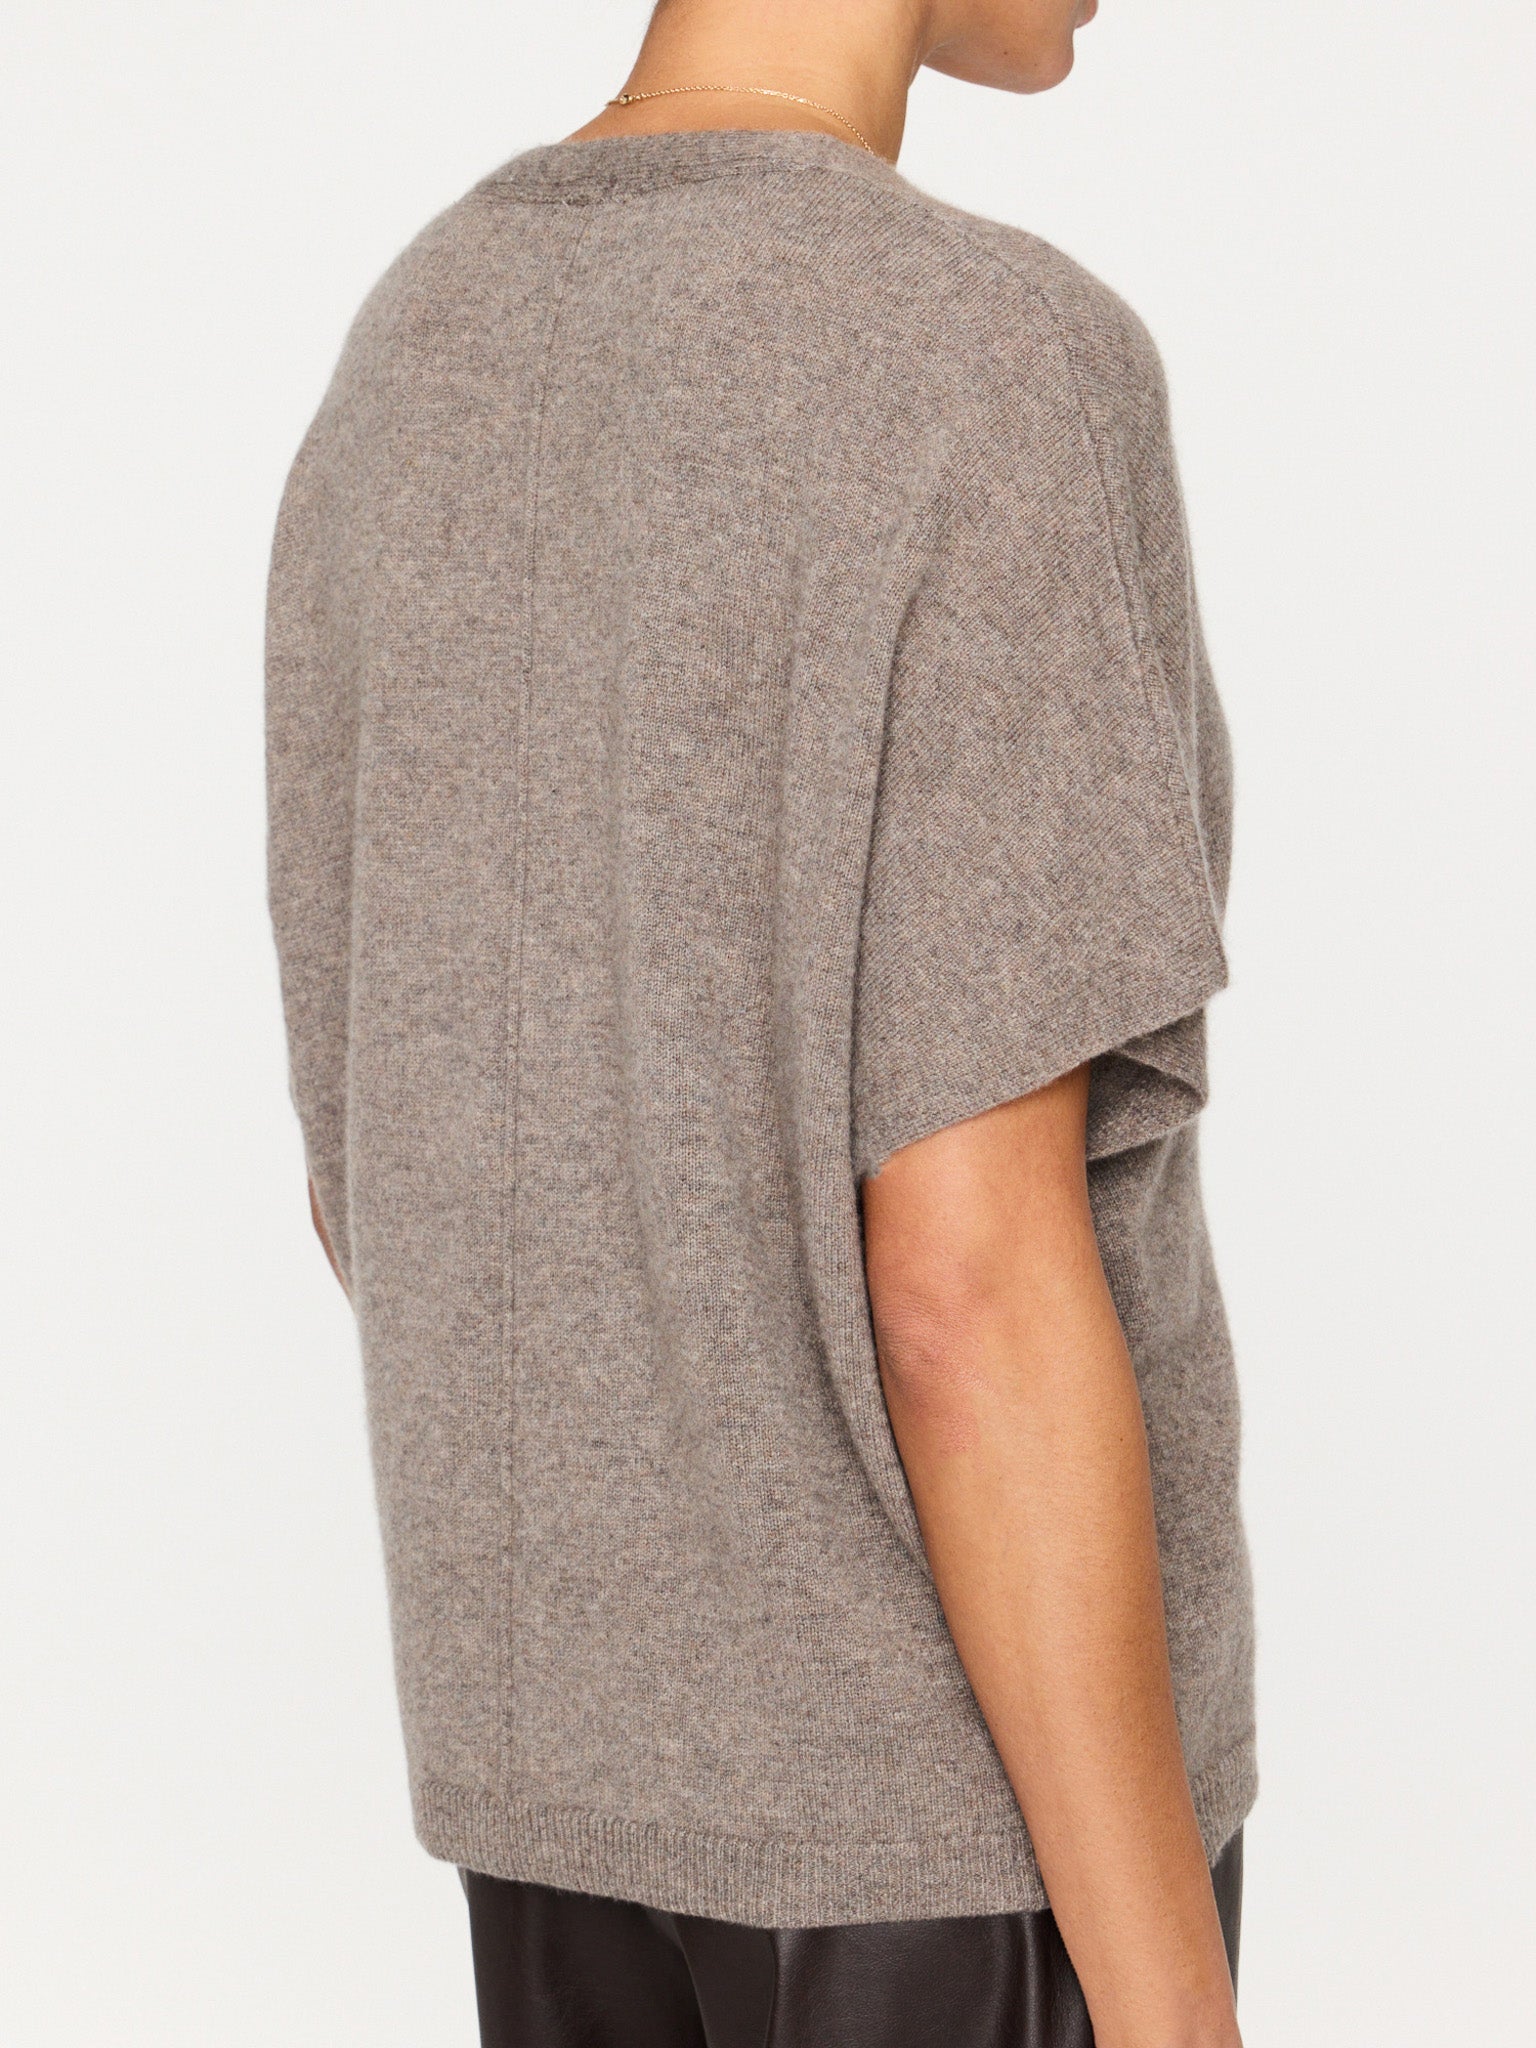 Ophi cashmere grey v-neck t-shirt top back view